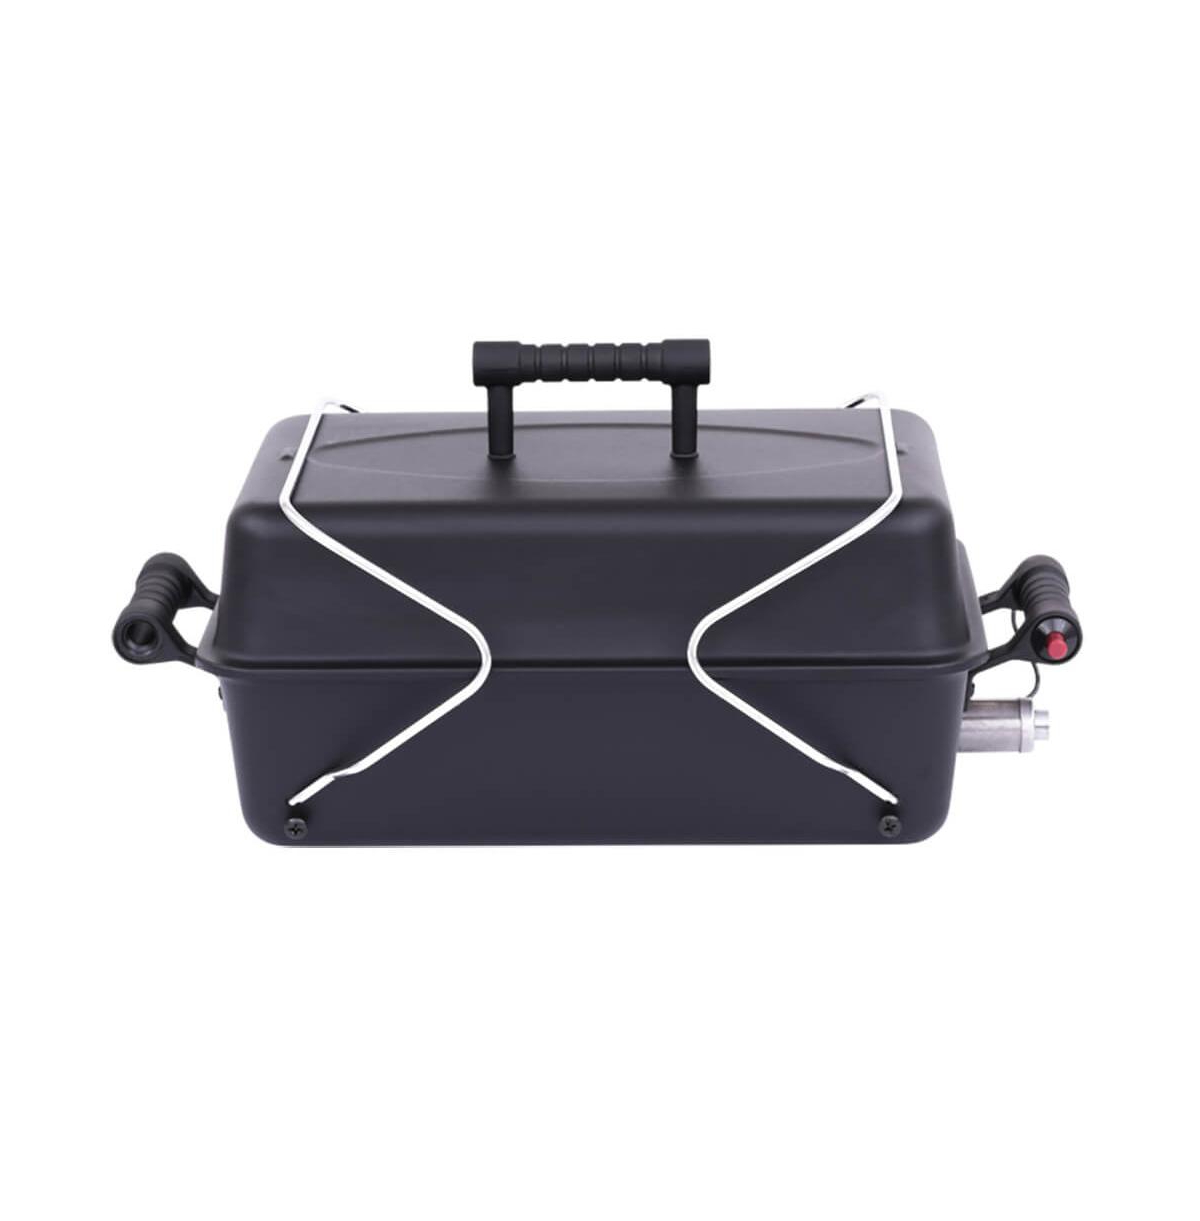 1-Burner Deluxe Portable Propane Gas Grill - Black - Black